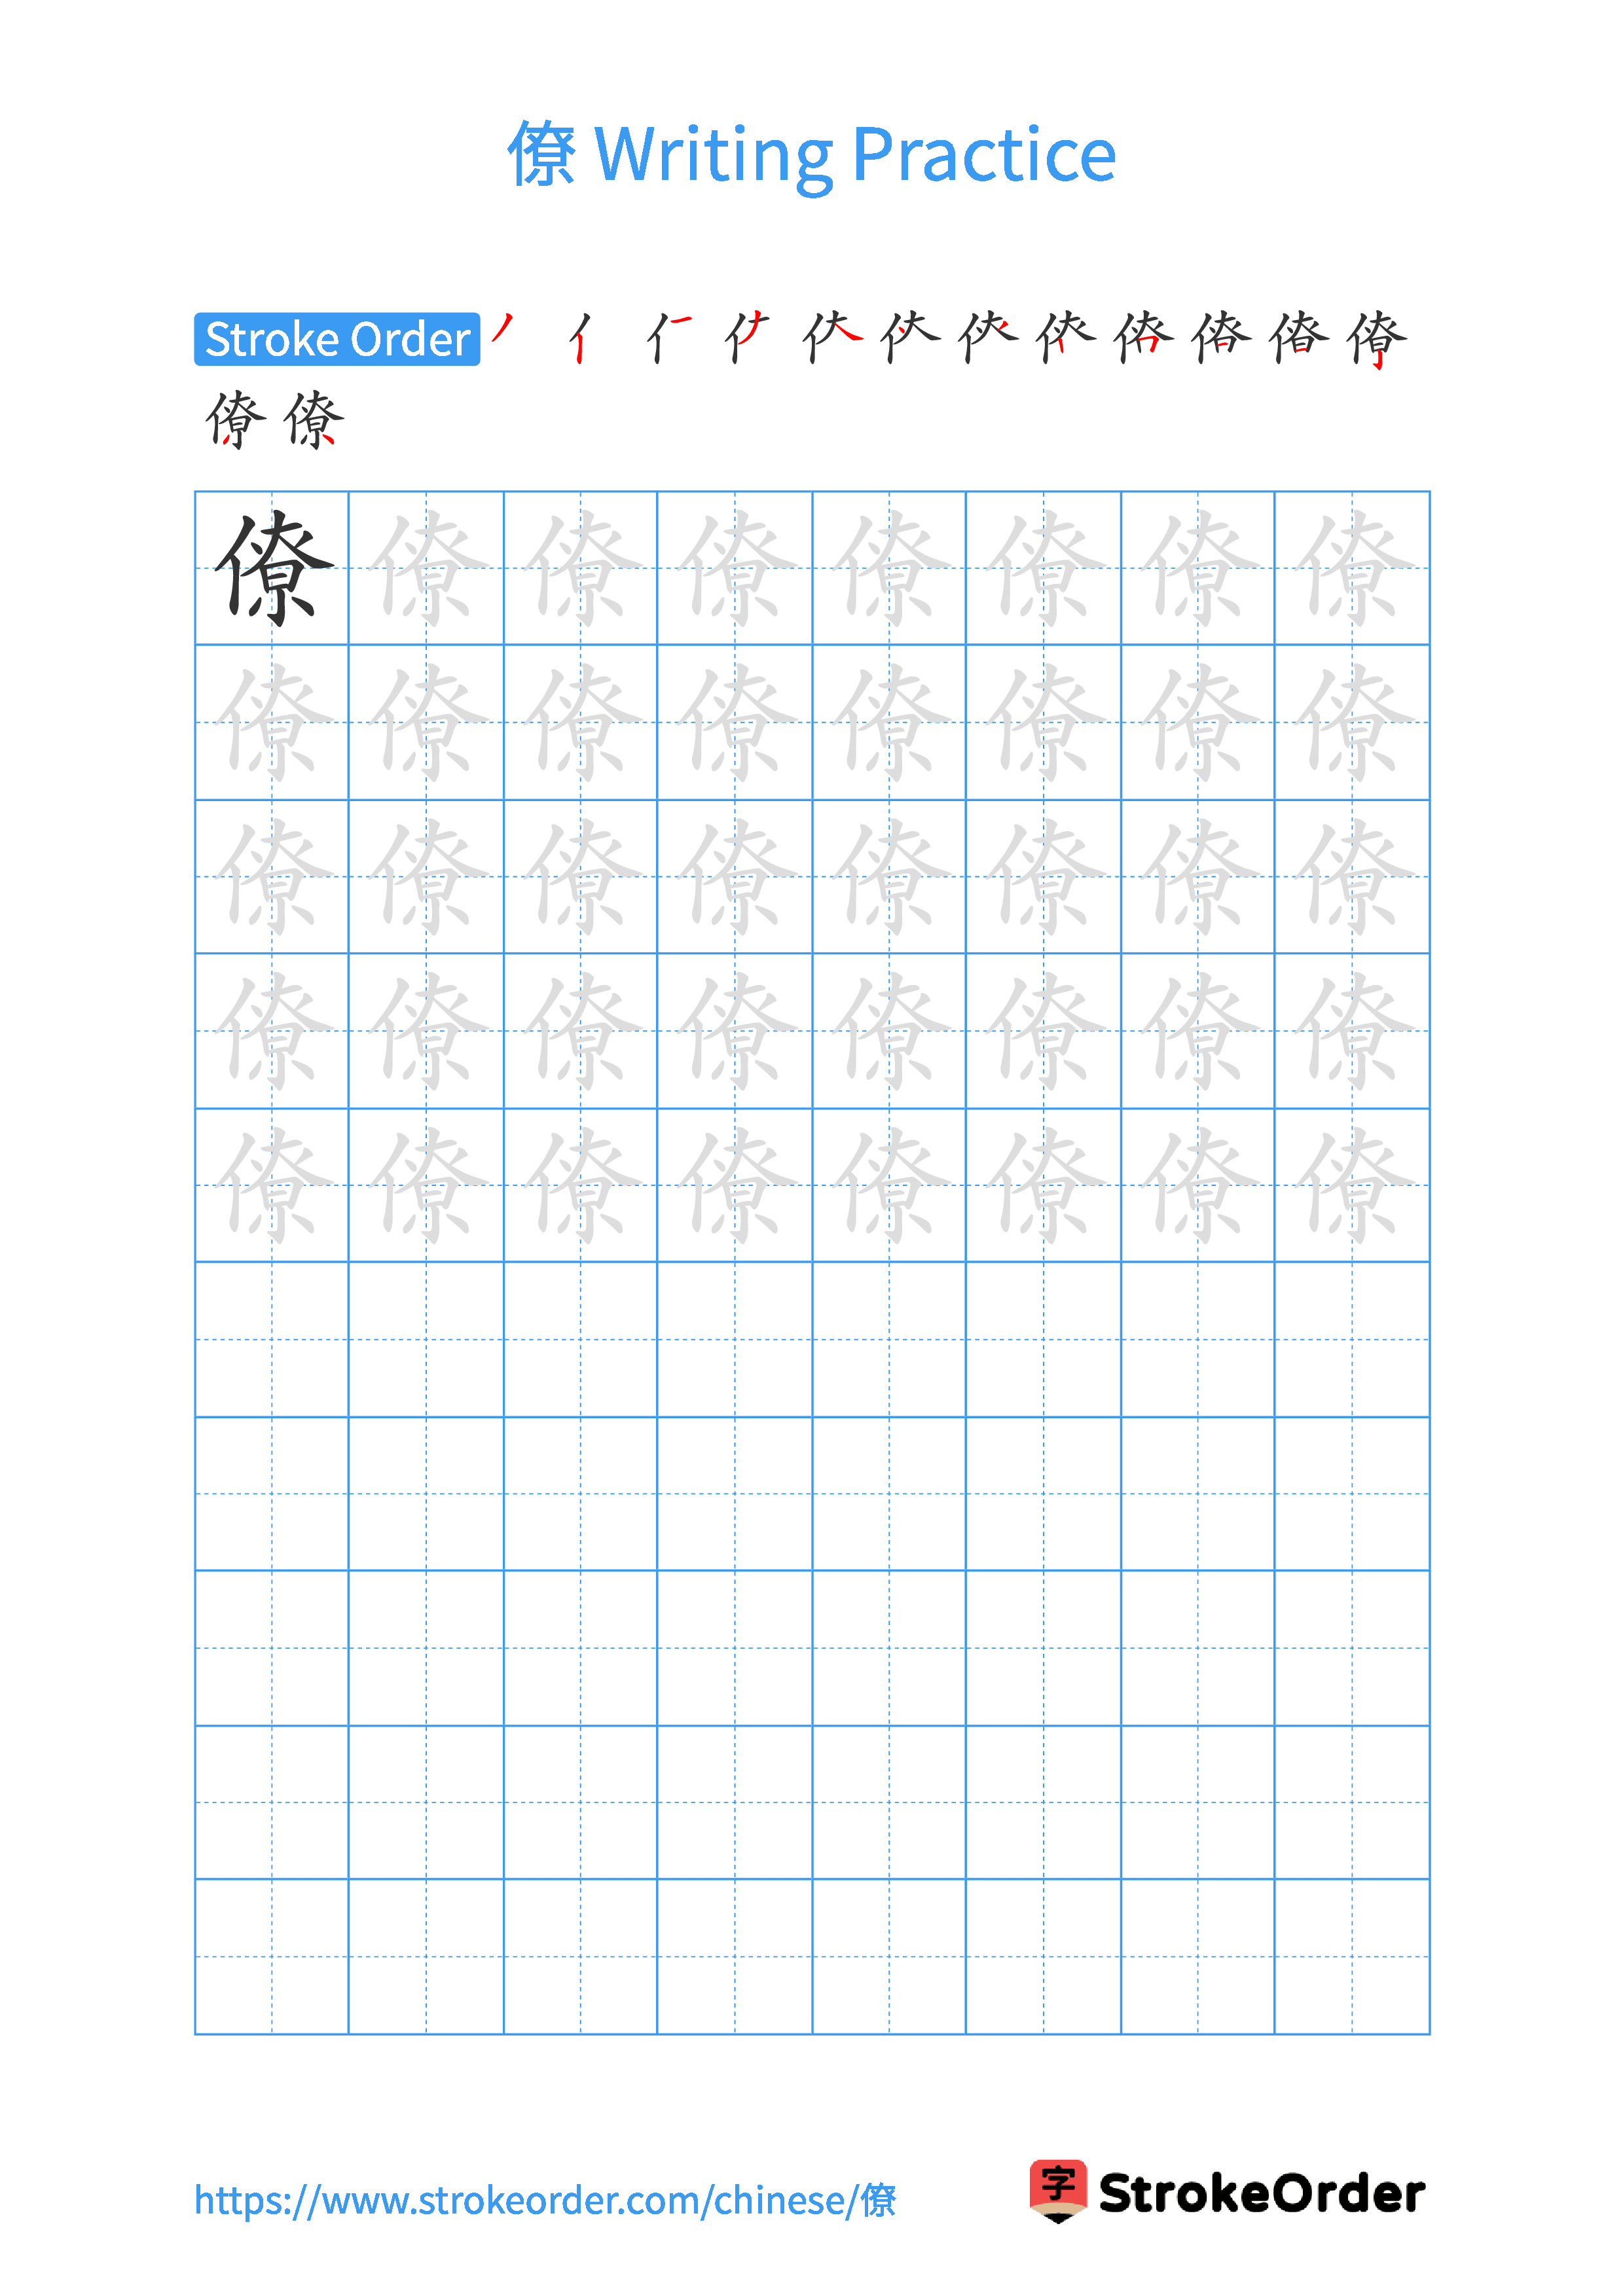 Printable Handwriting Practice Worksheet of the Chinese character 僚 in Portrait Orientation (Tian Zi Ge)